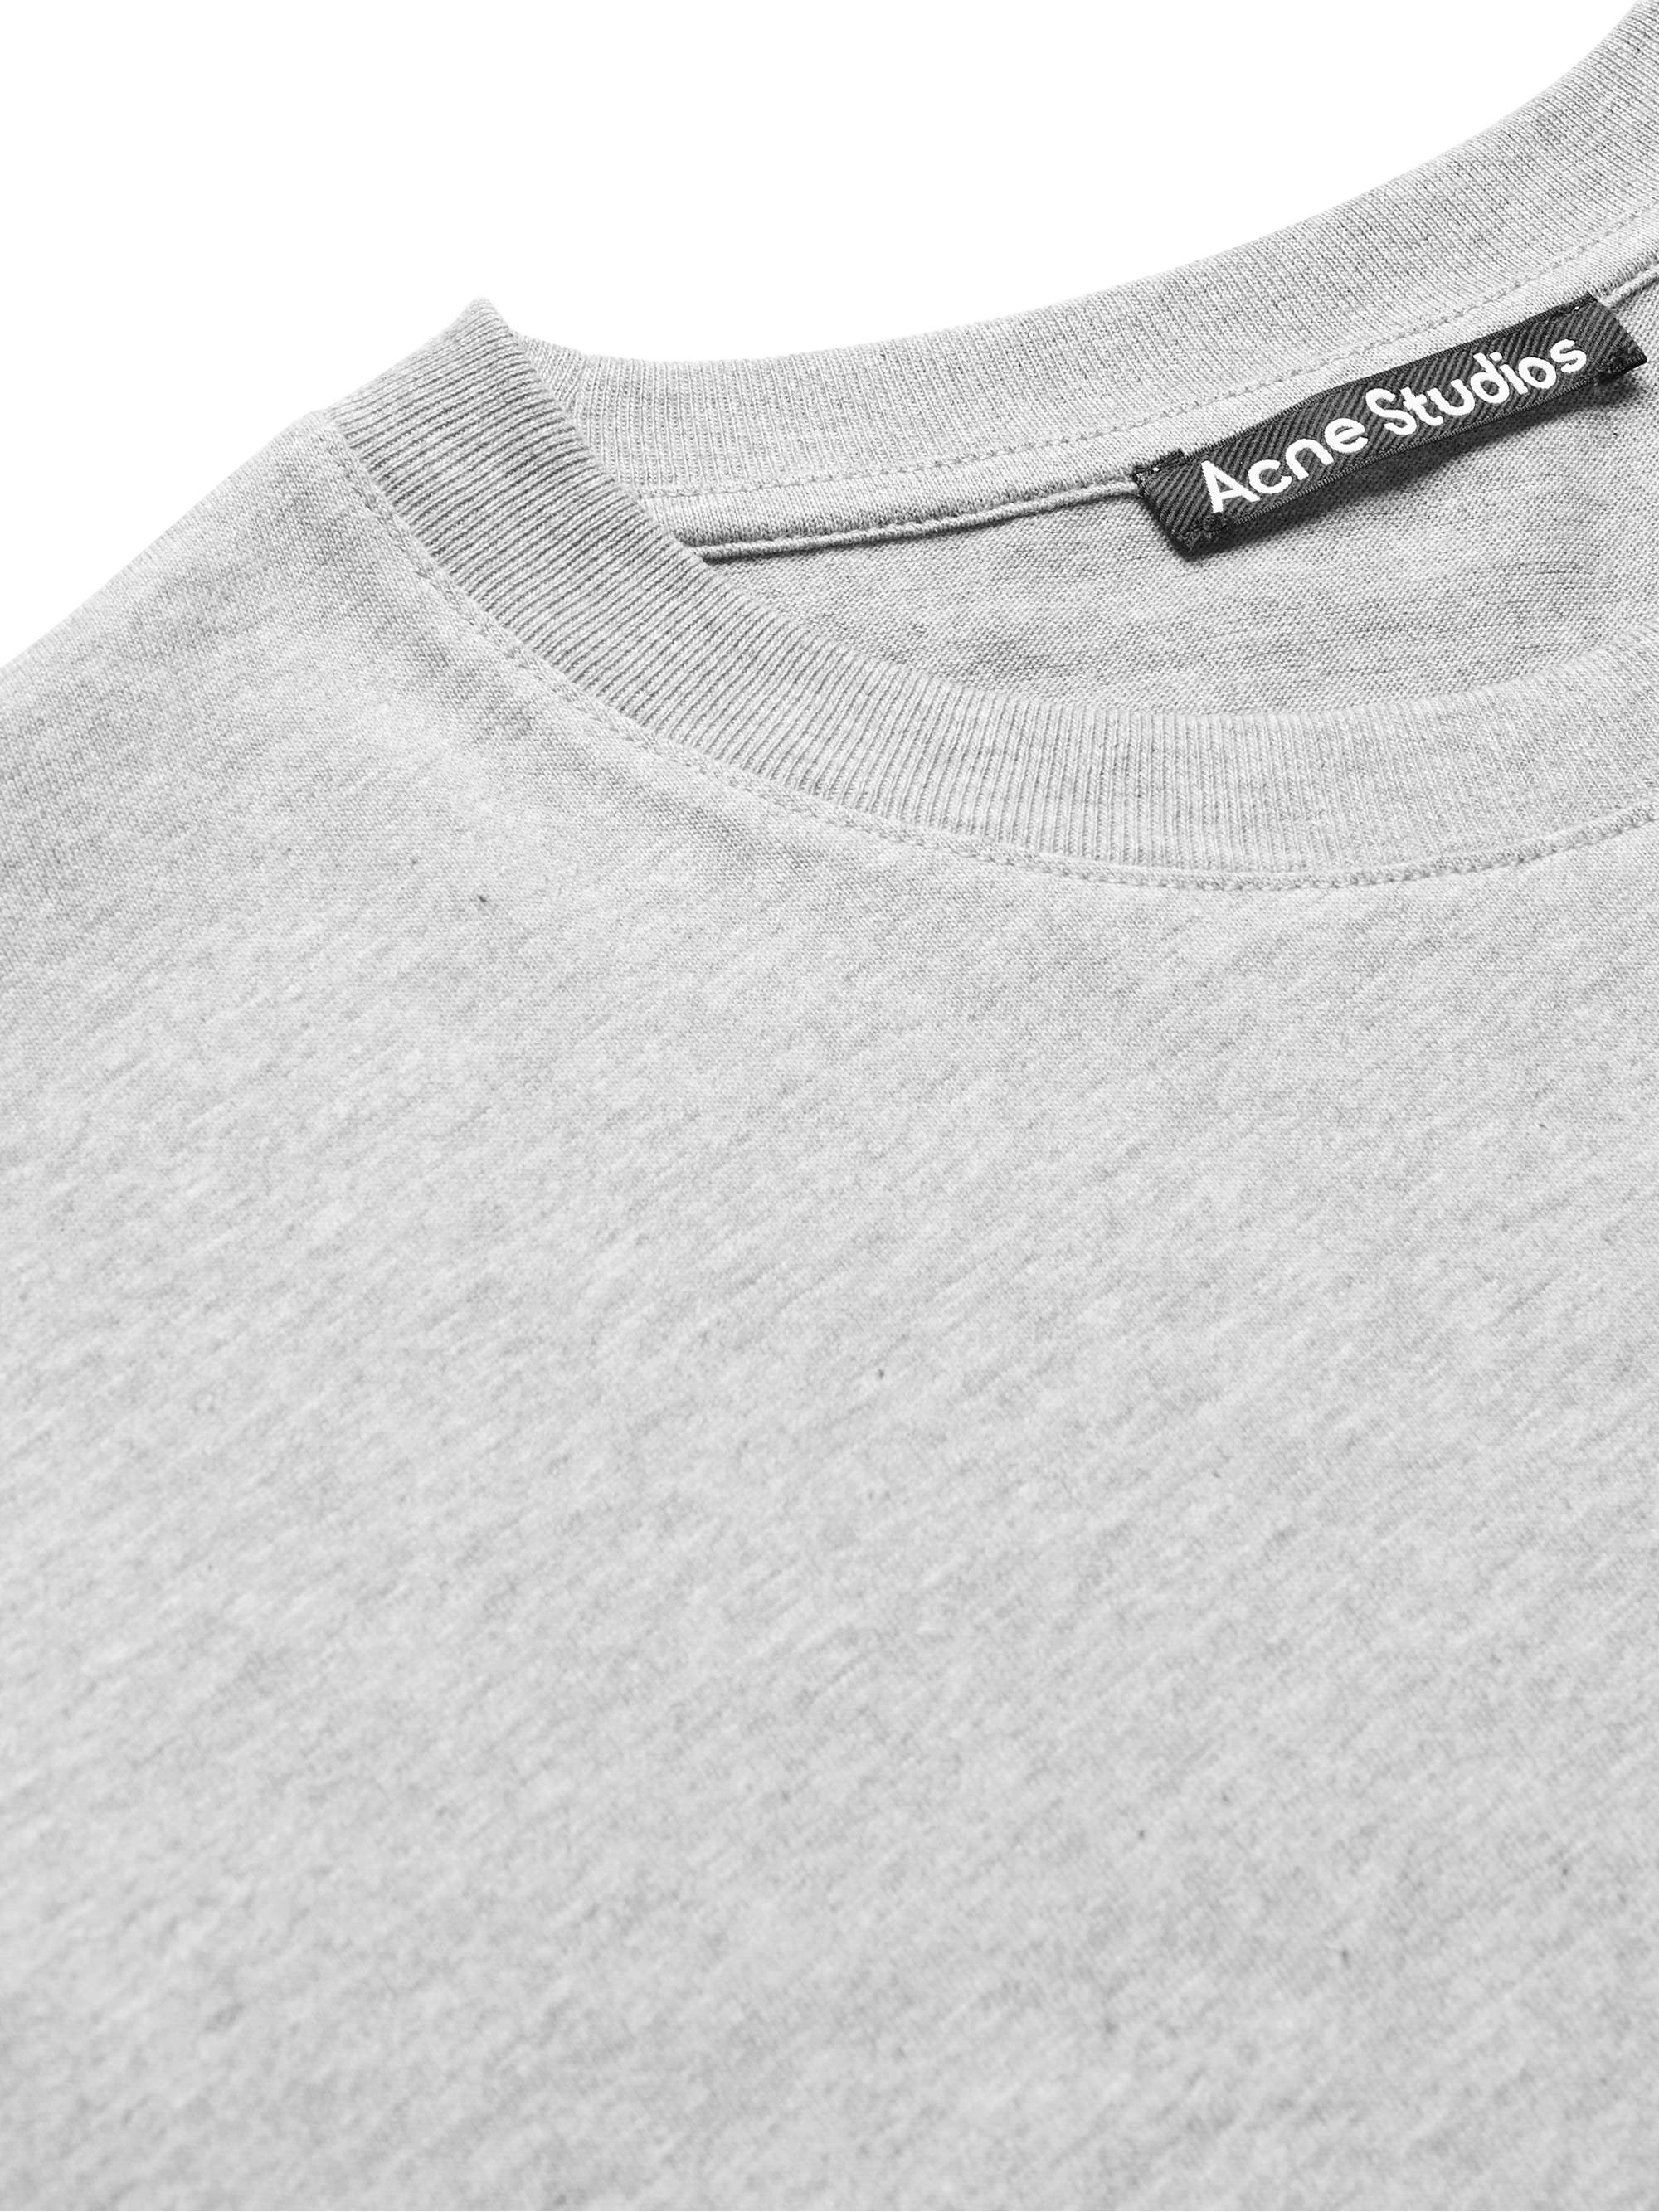 ACNE STUDIOS Exford Logo-Appliquéd Cotton-Jersey T-Shirt